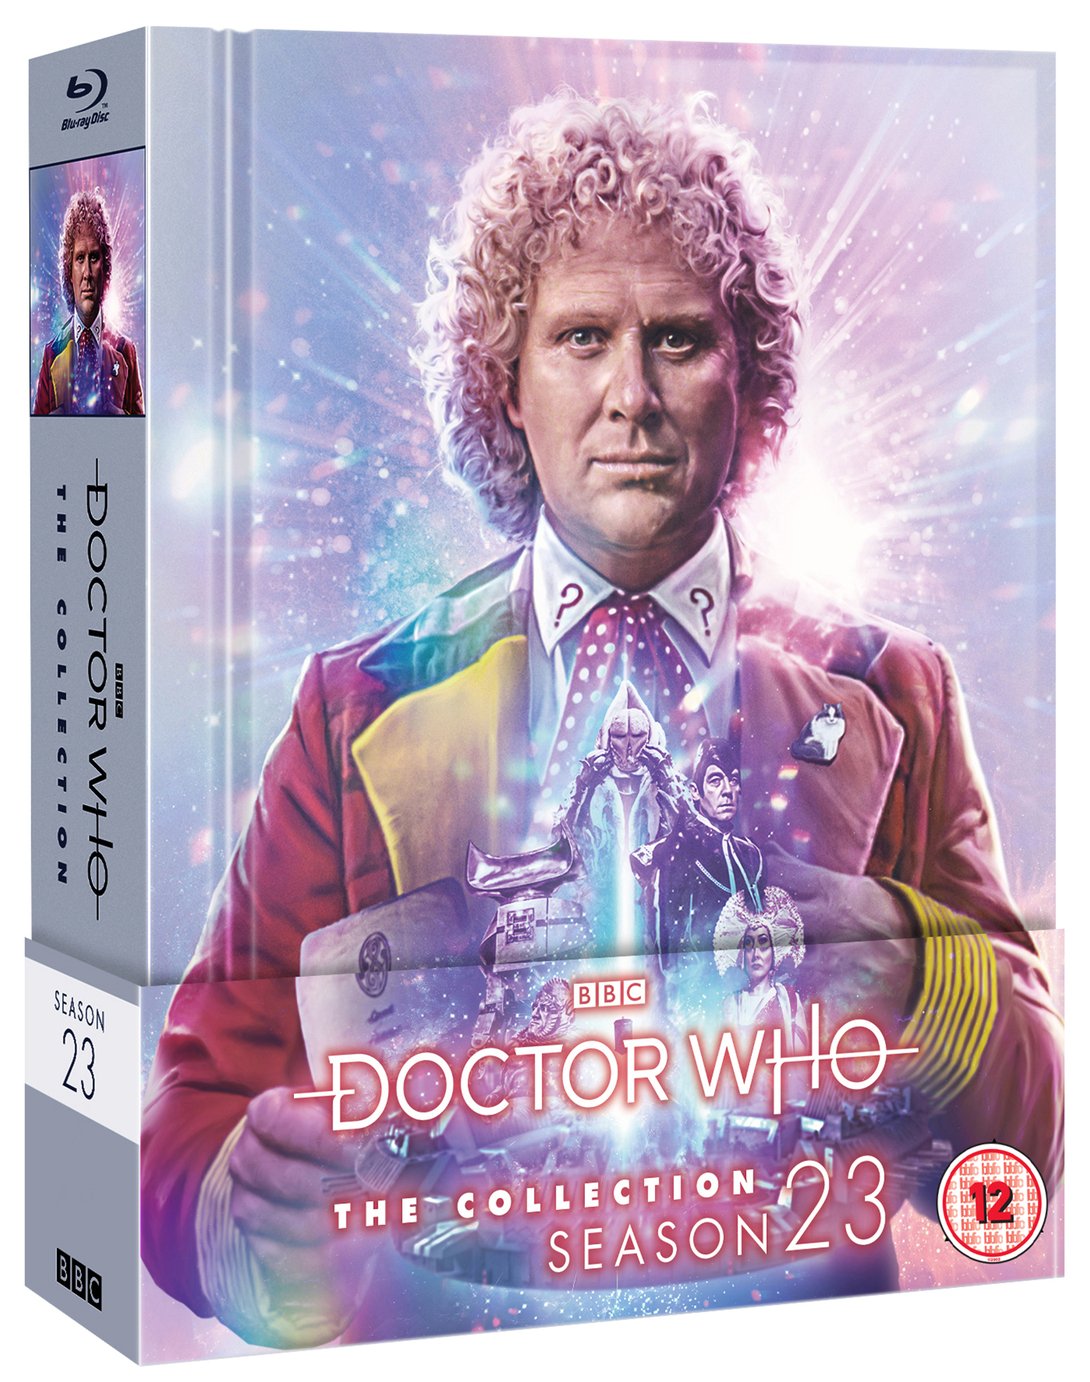 Doctor Who: The Collection Season 23 Blu-Ray Box Set